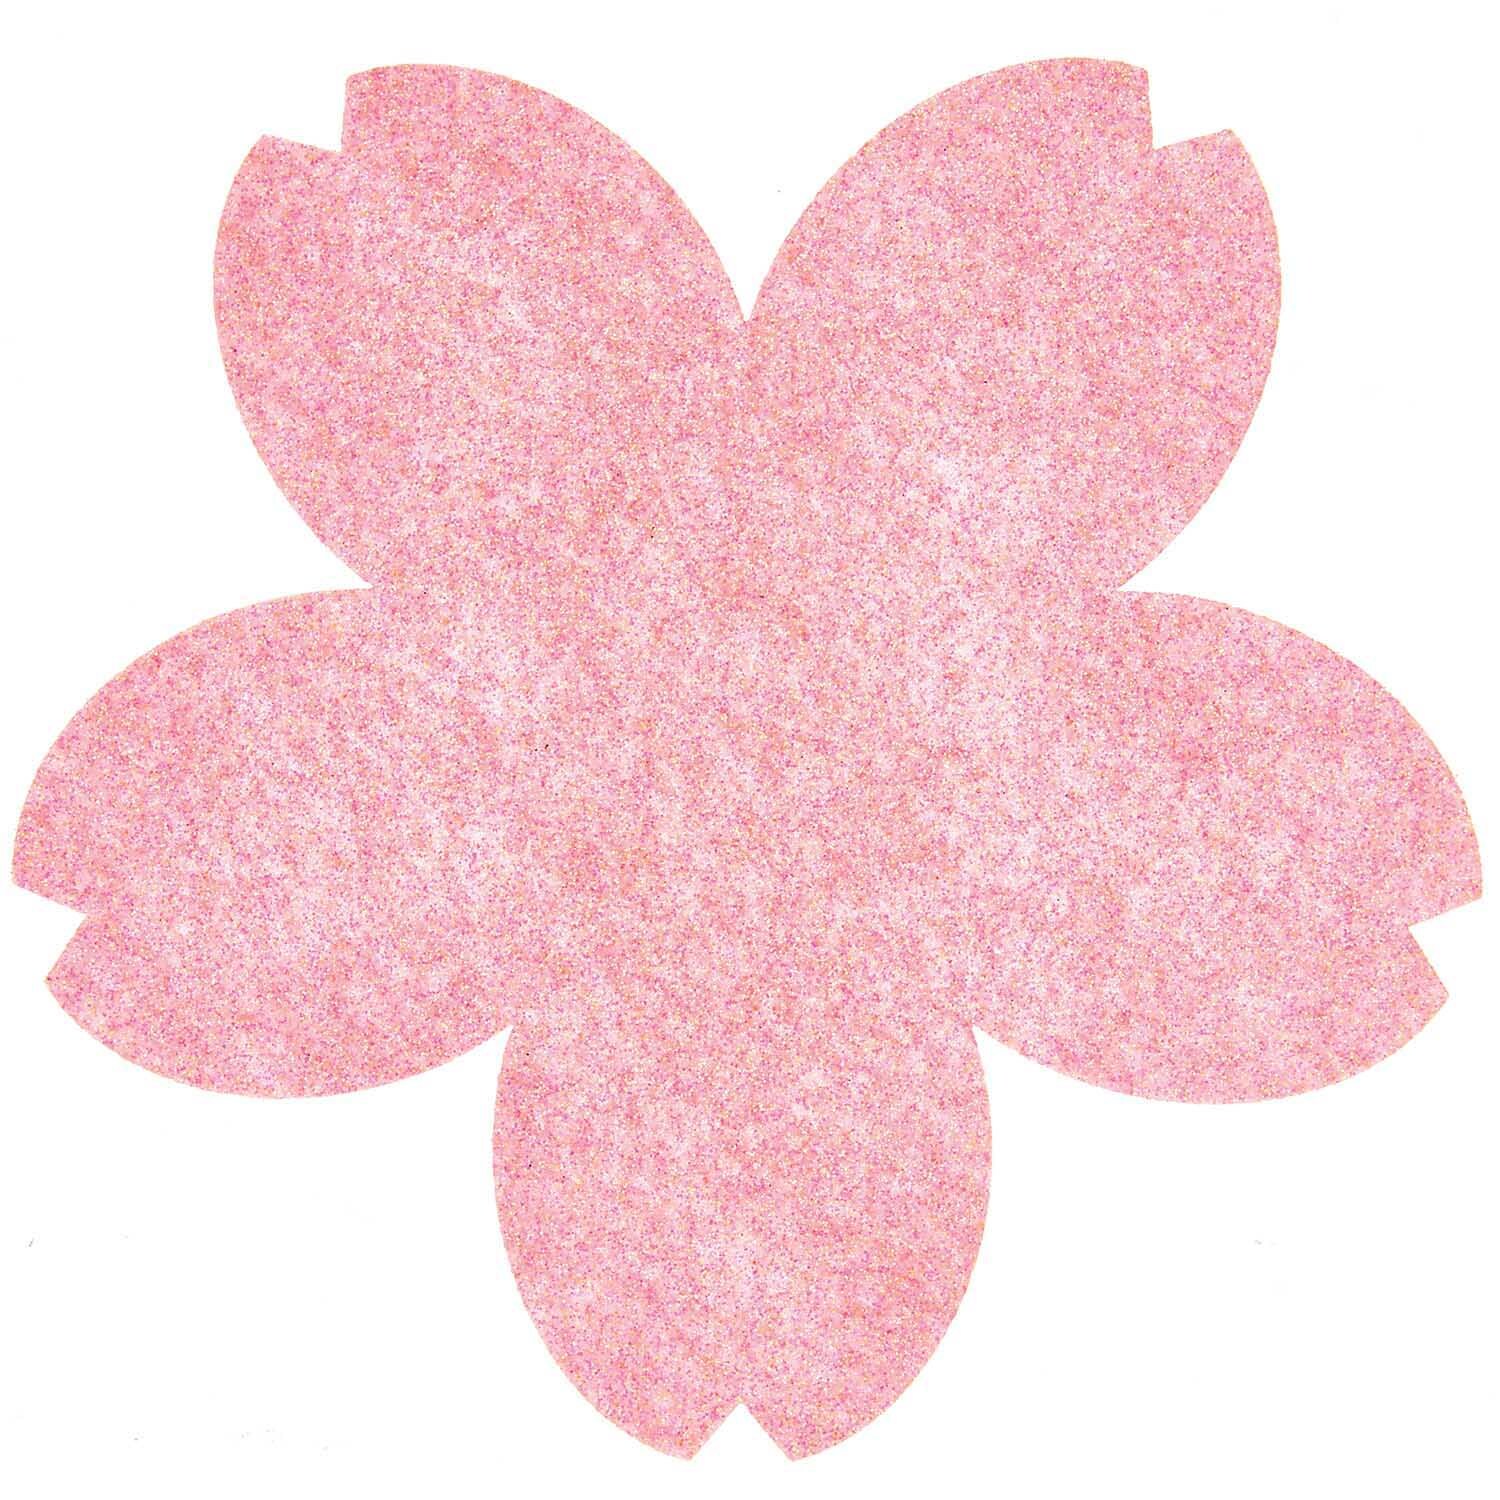 Filz Untersetzer Kirschblüten rosa Glitzer 15x15cm 6 Stück